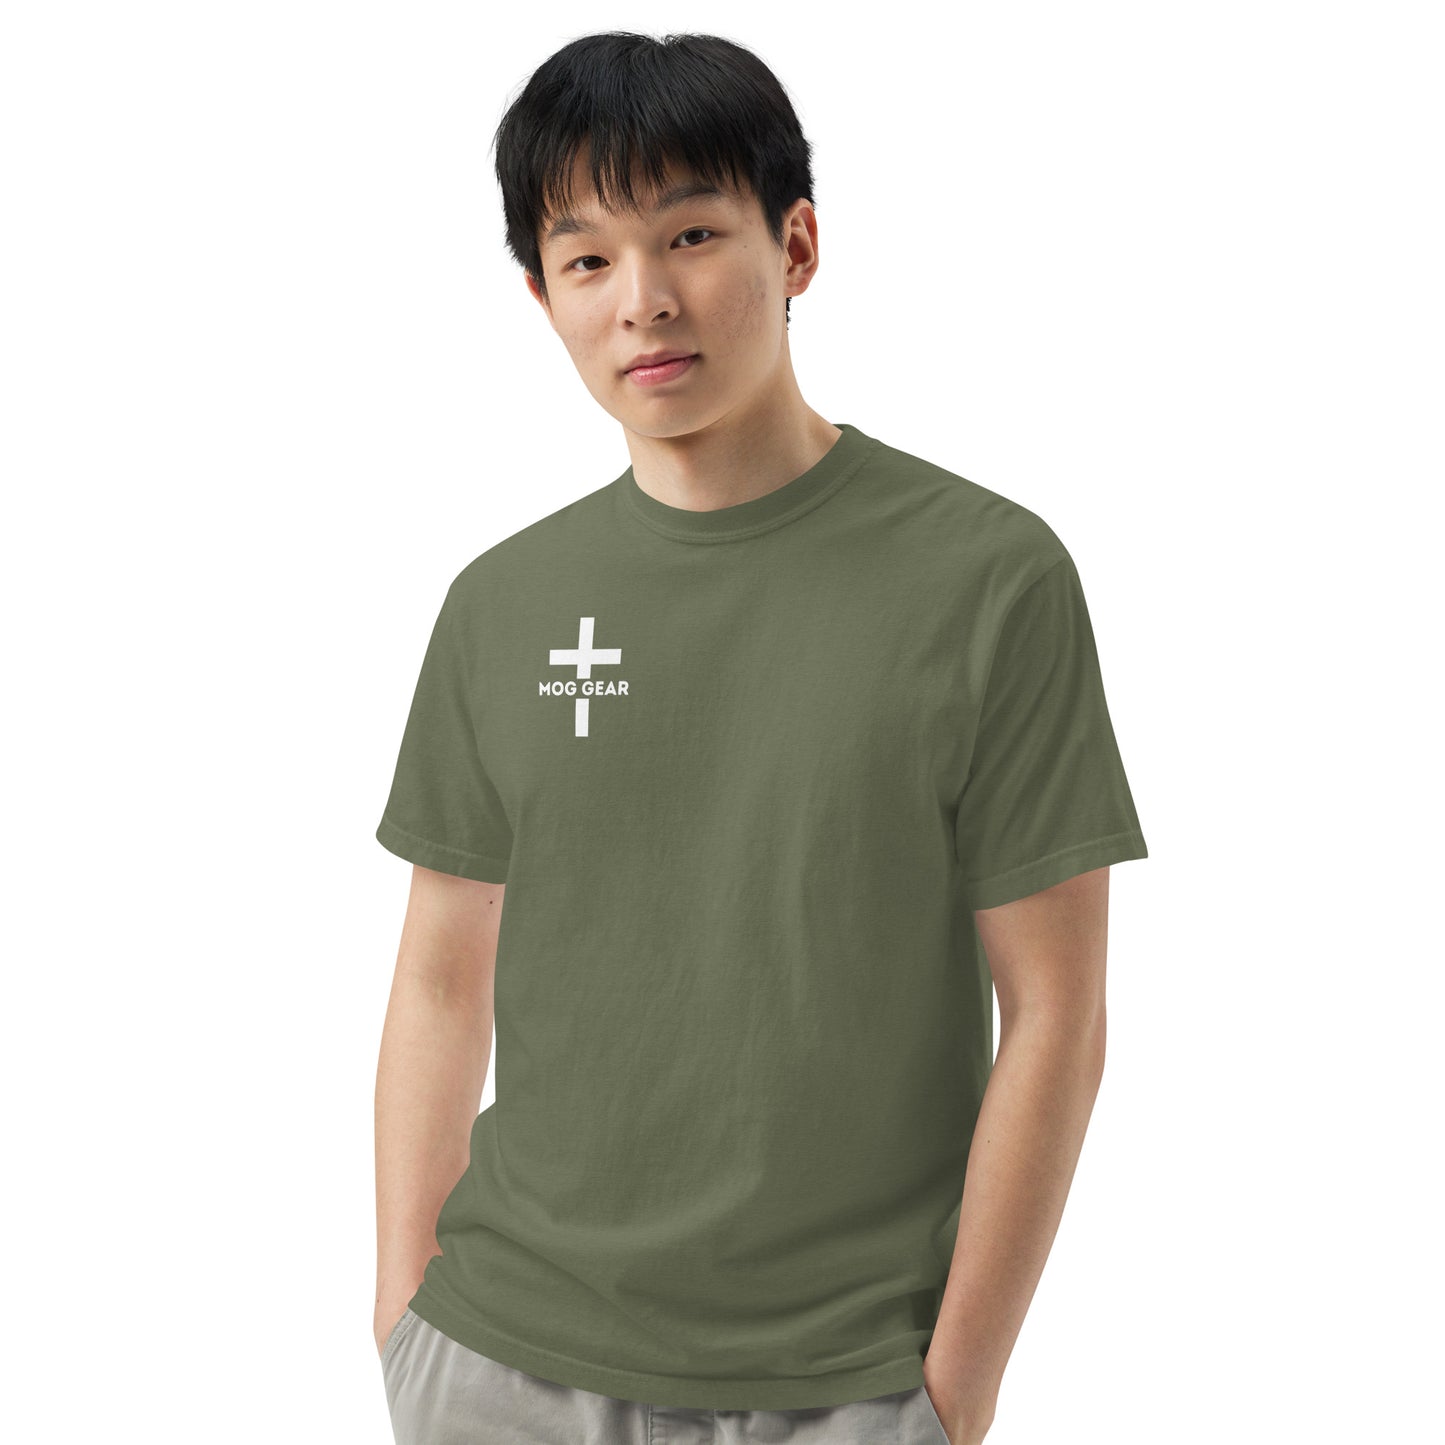 He is Risen T-shirt